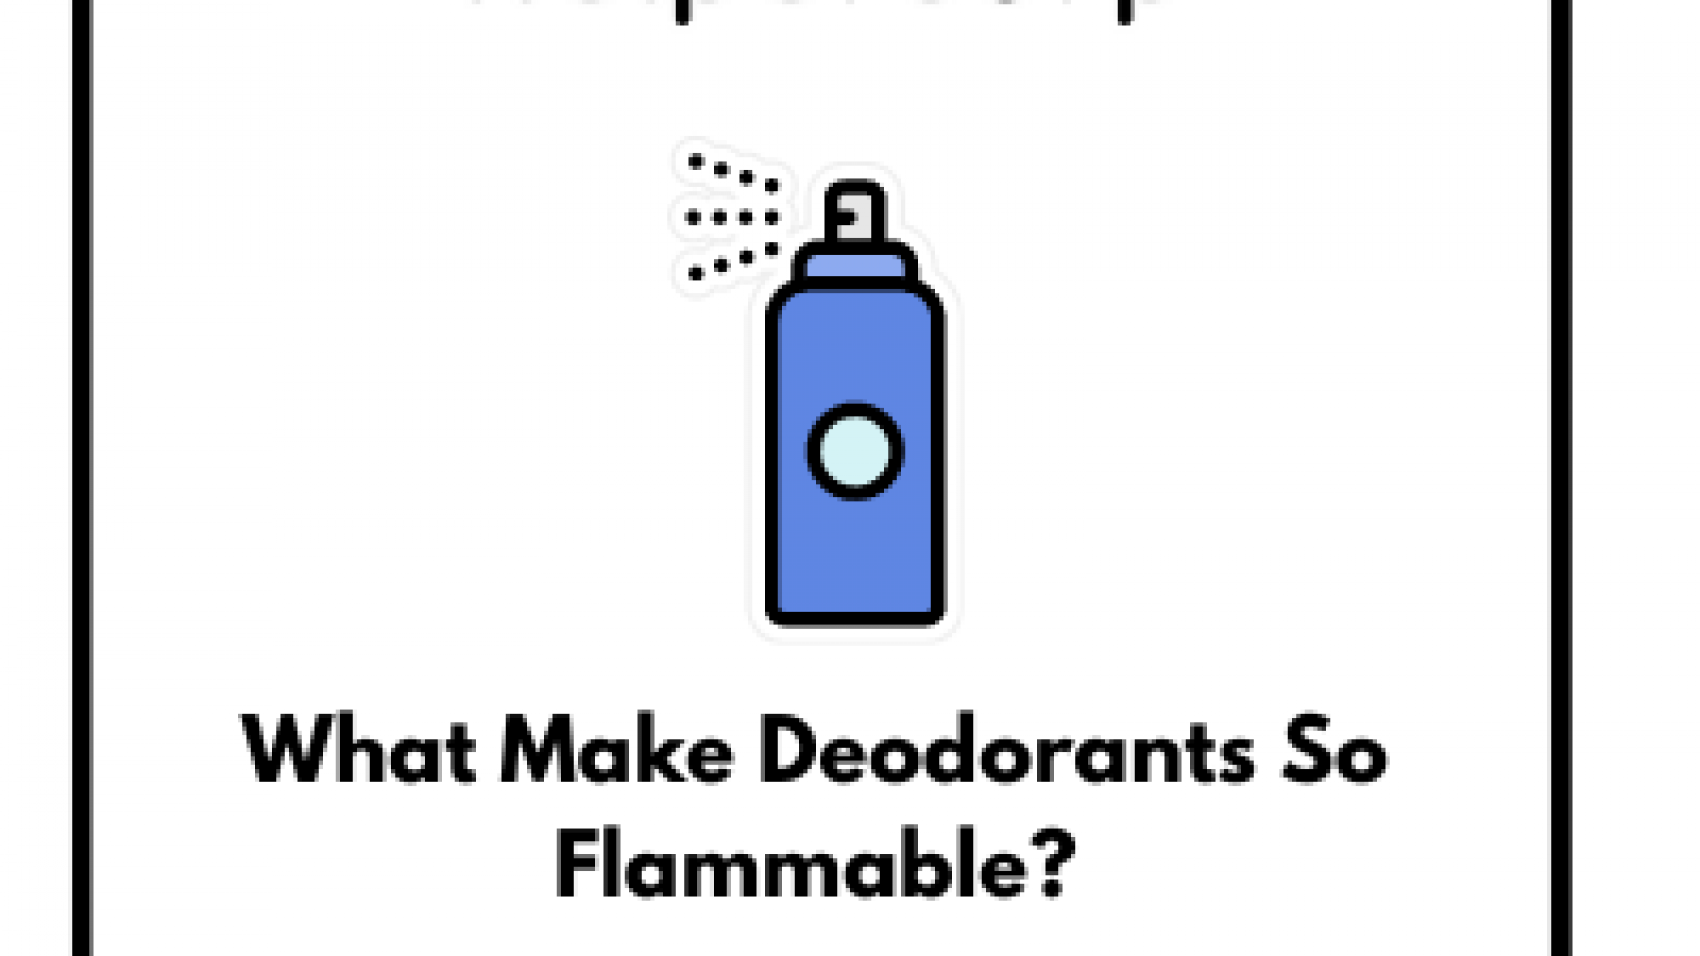 What-Make-Deodorants-So-Flammable-